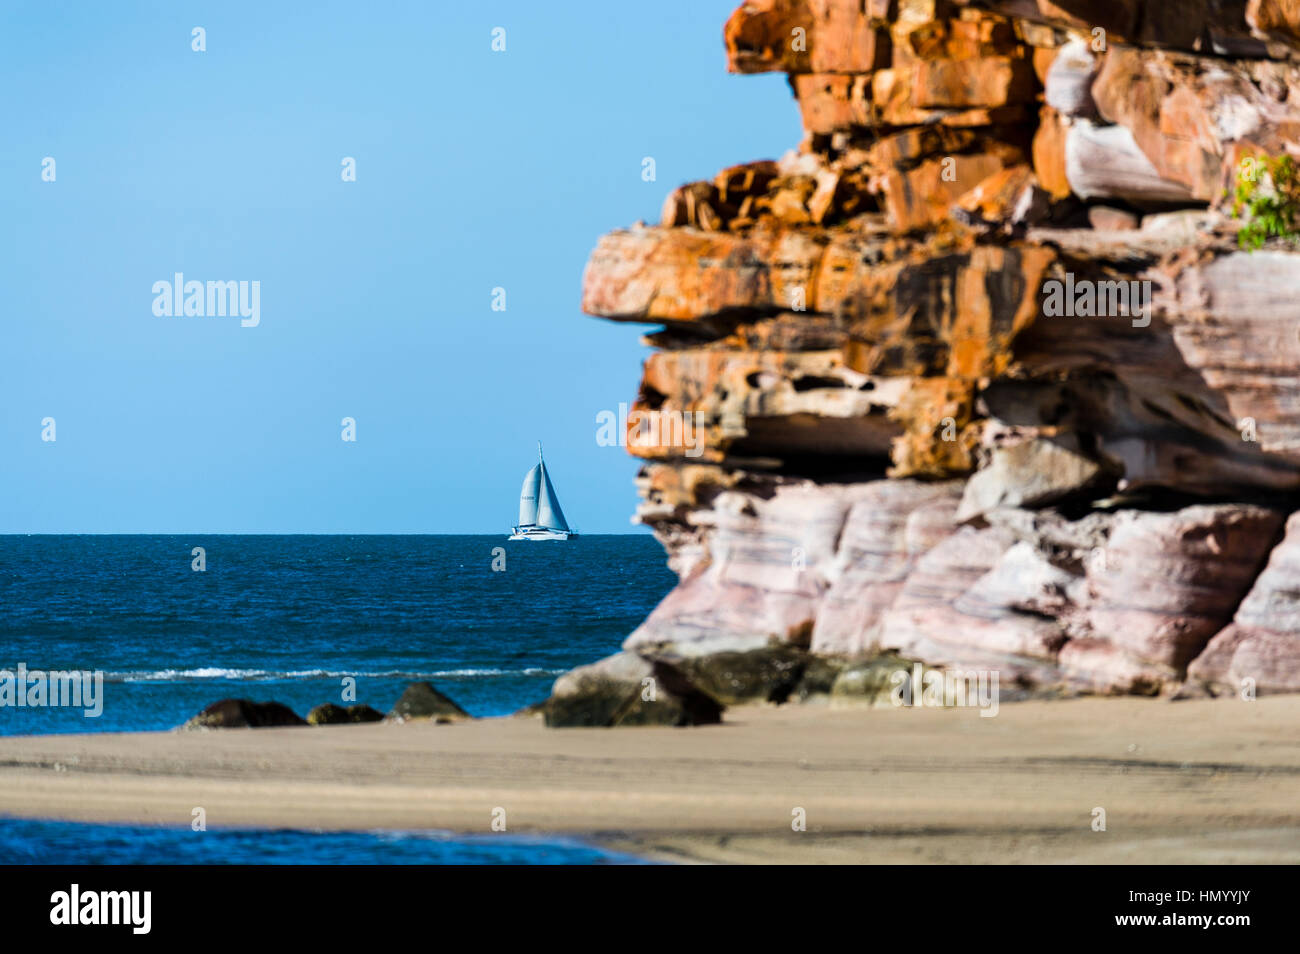 A catamaran sailing past a secluded beach on a desert coastline. Stock Photo